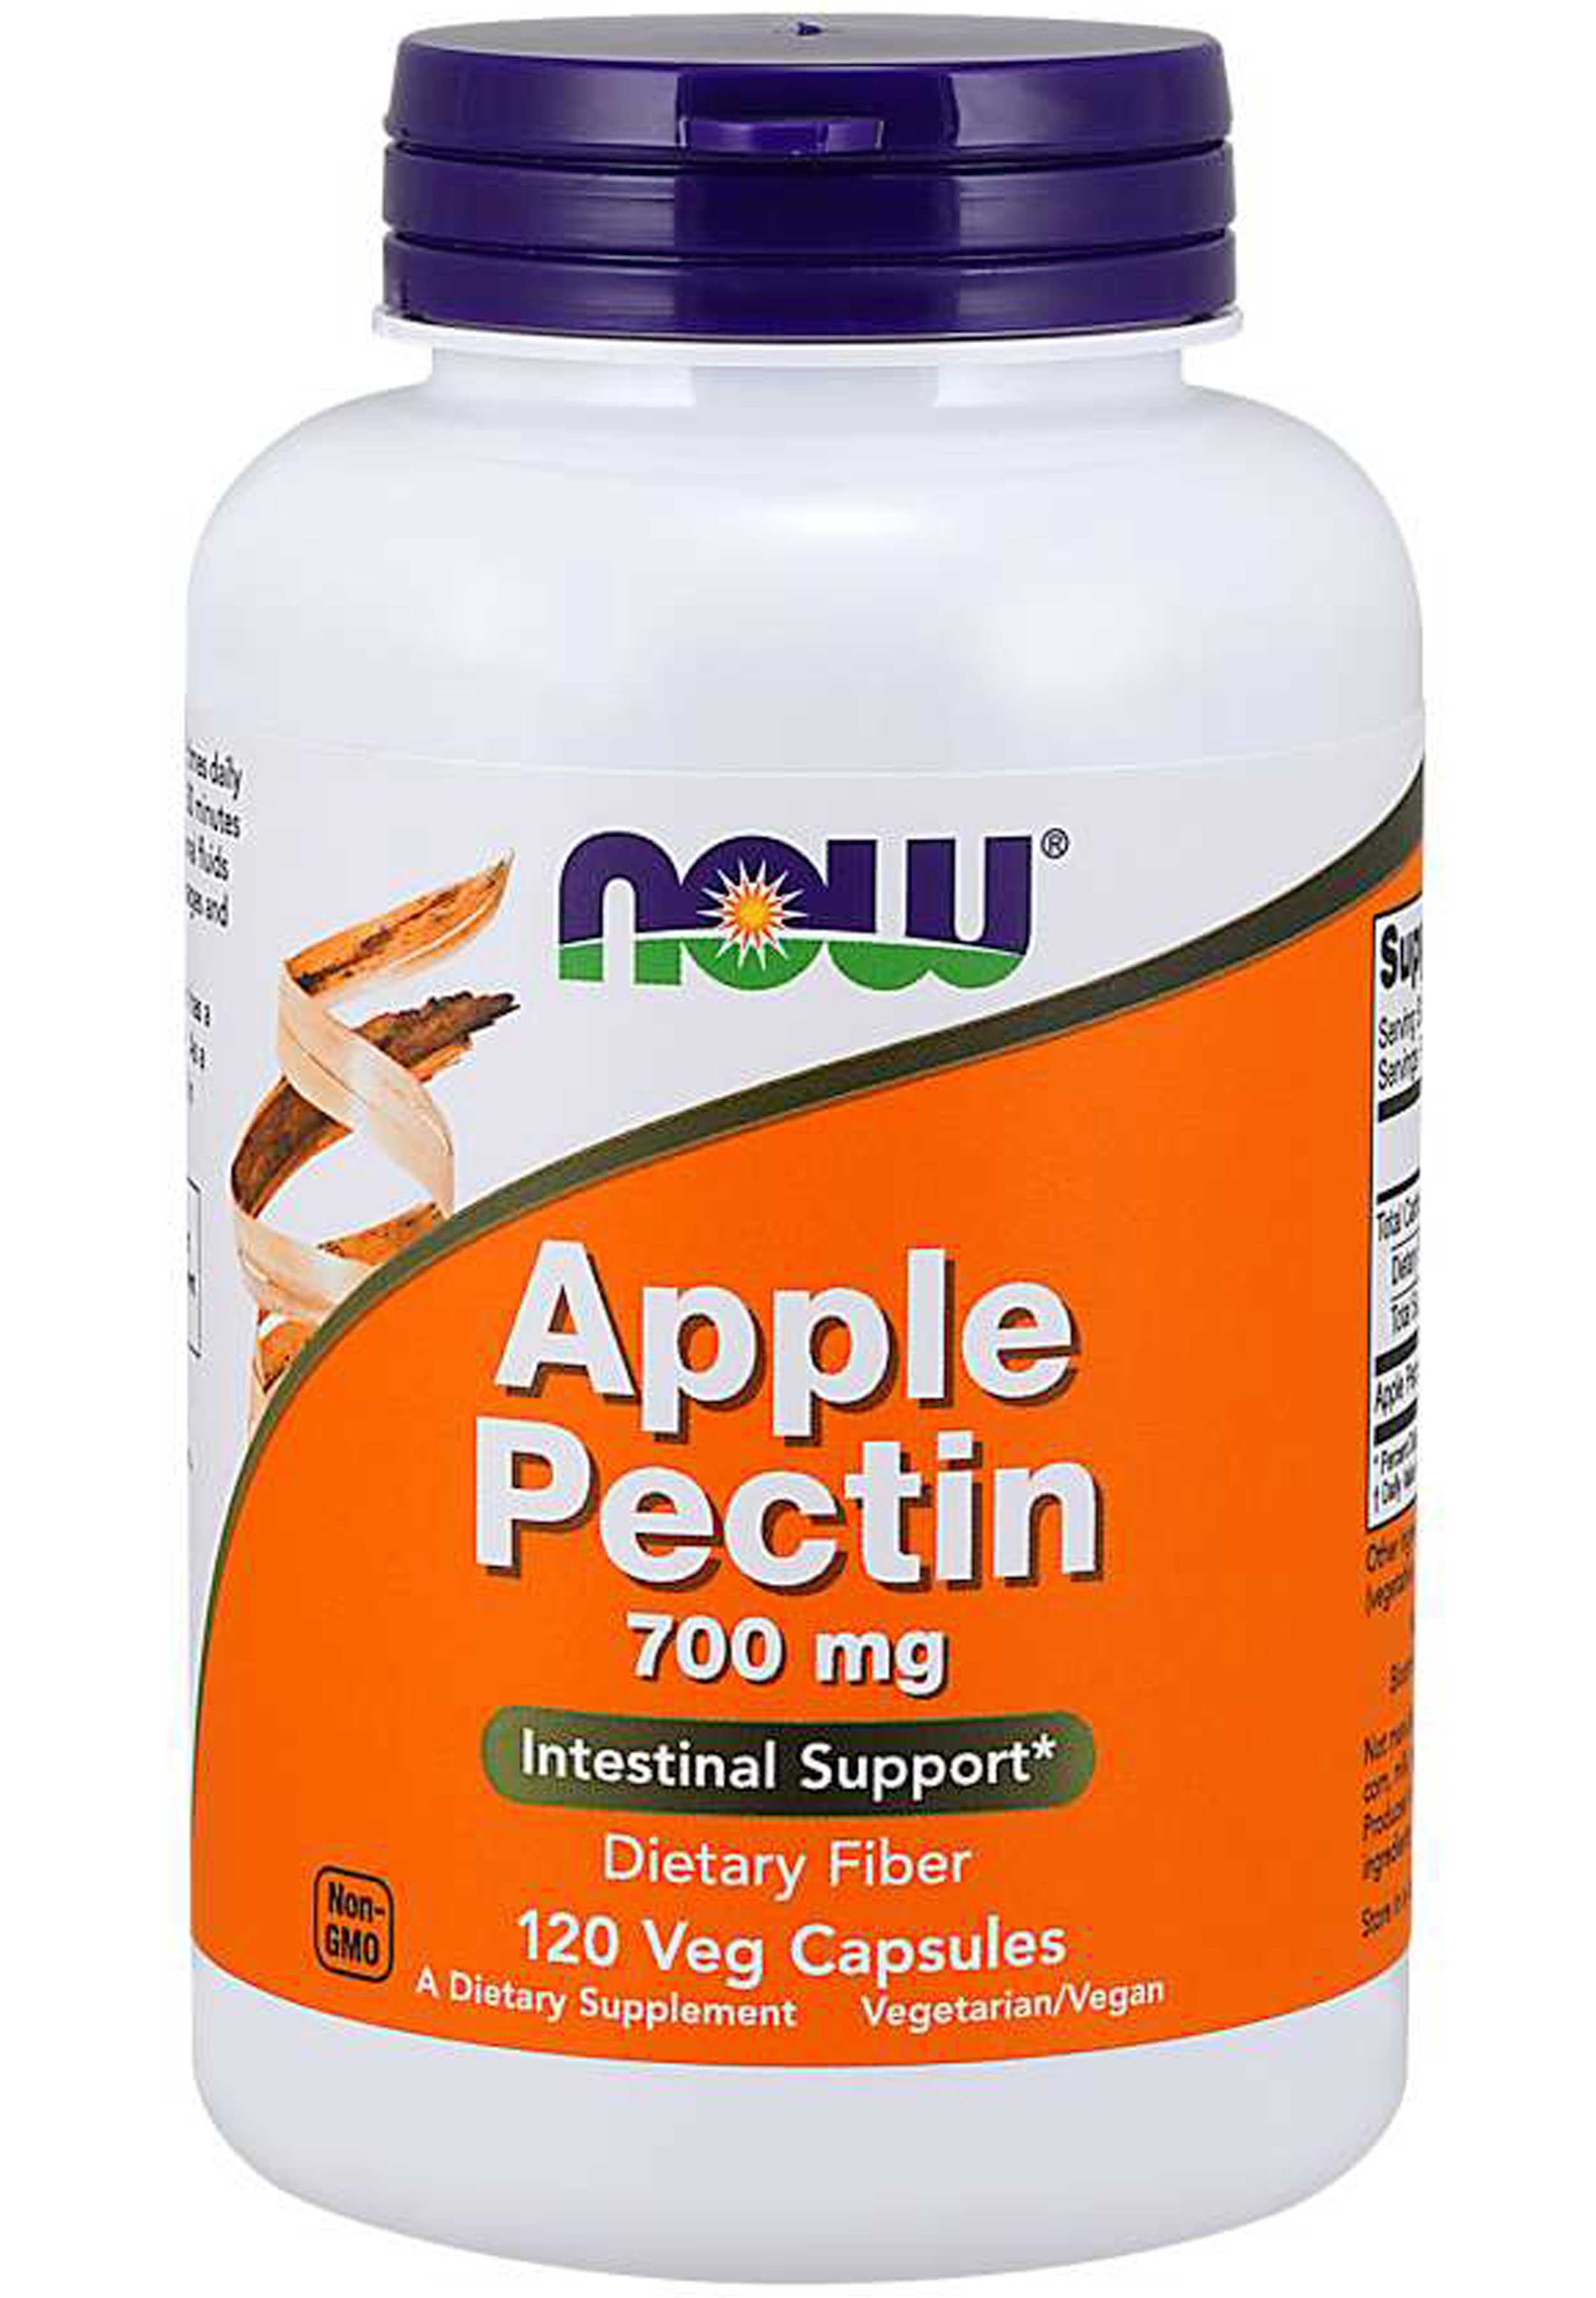 NOW Apple Pectin 700 mg